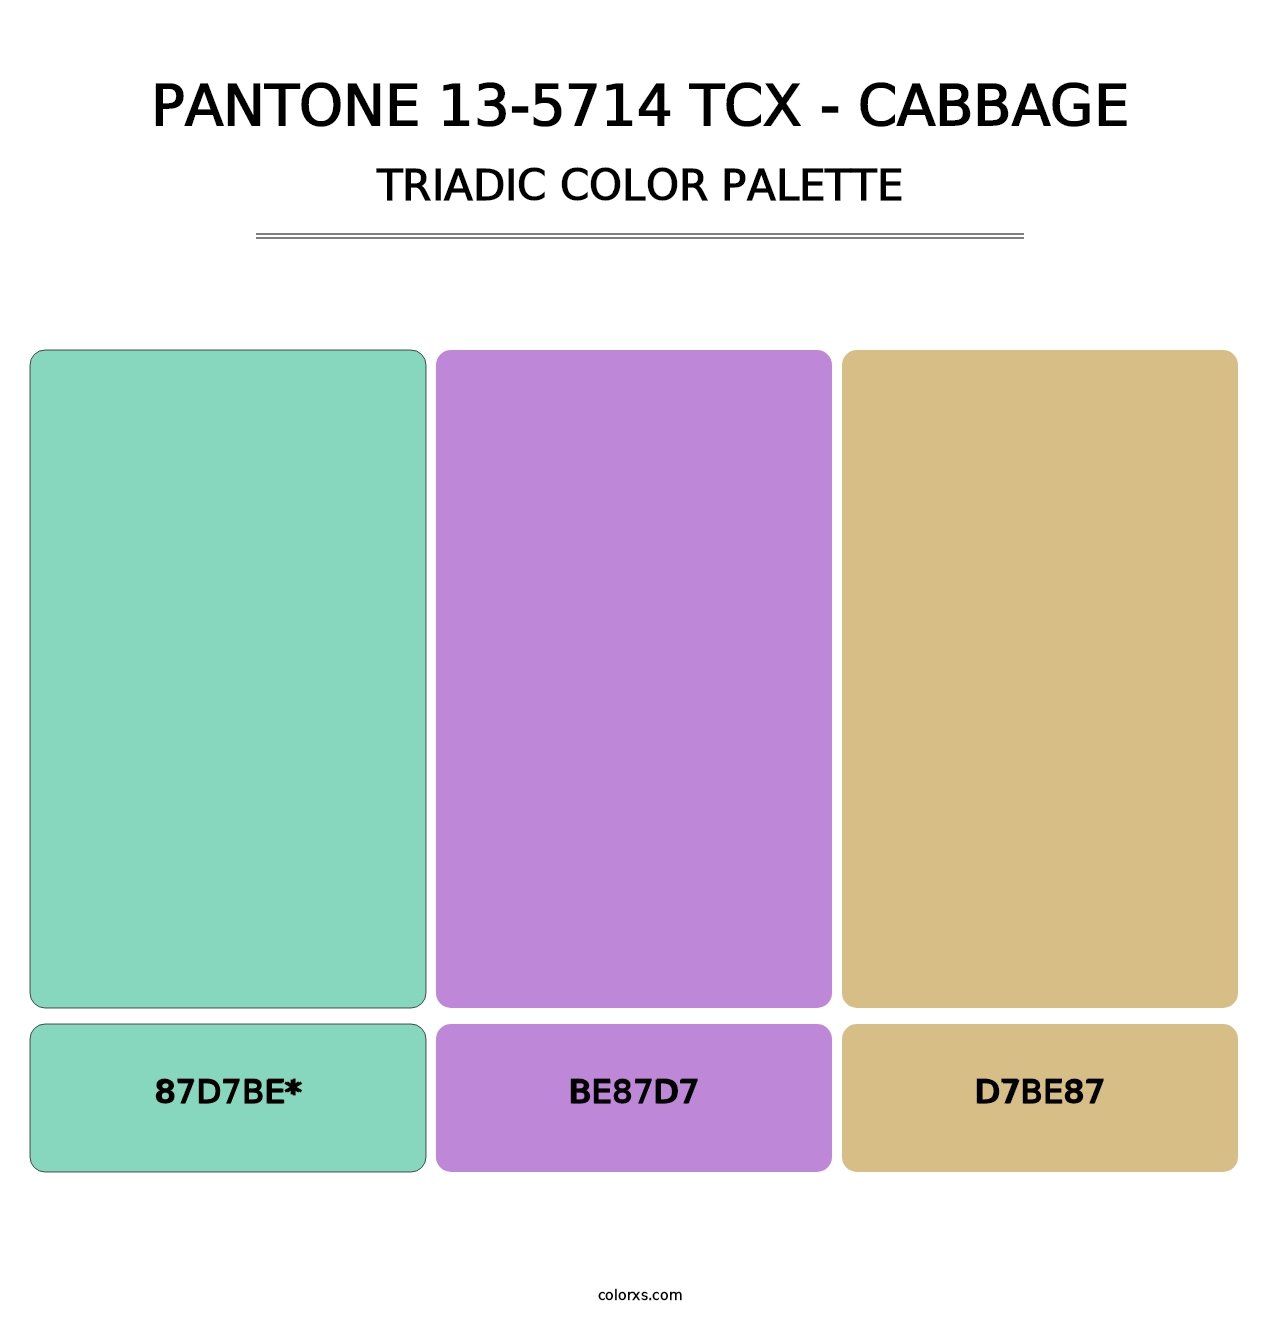 PANTONE 13-5714 TCX - Cabbage - Triadic Color Palette